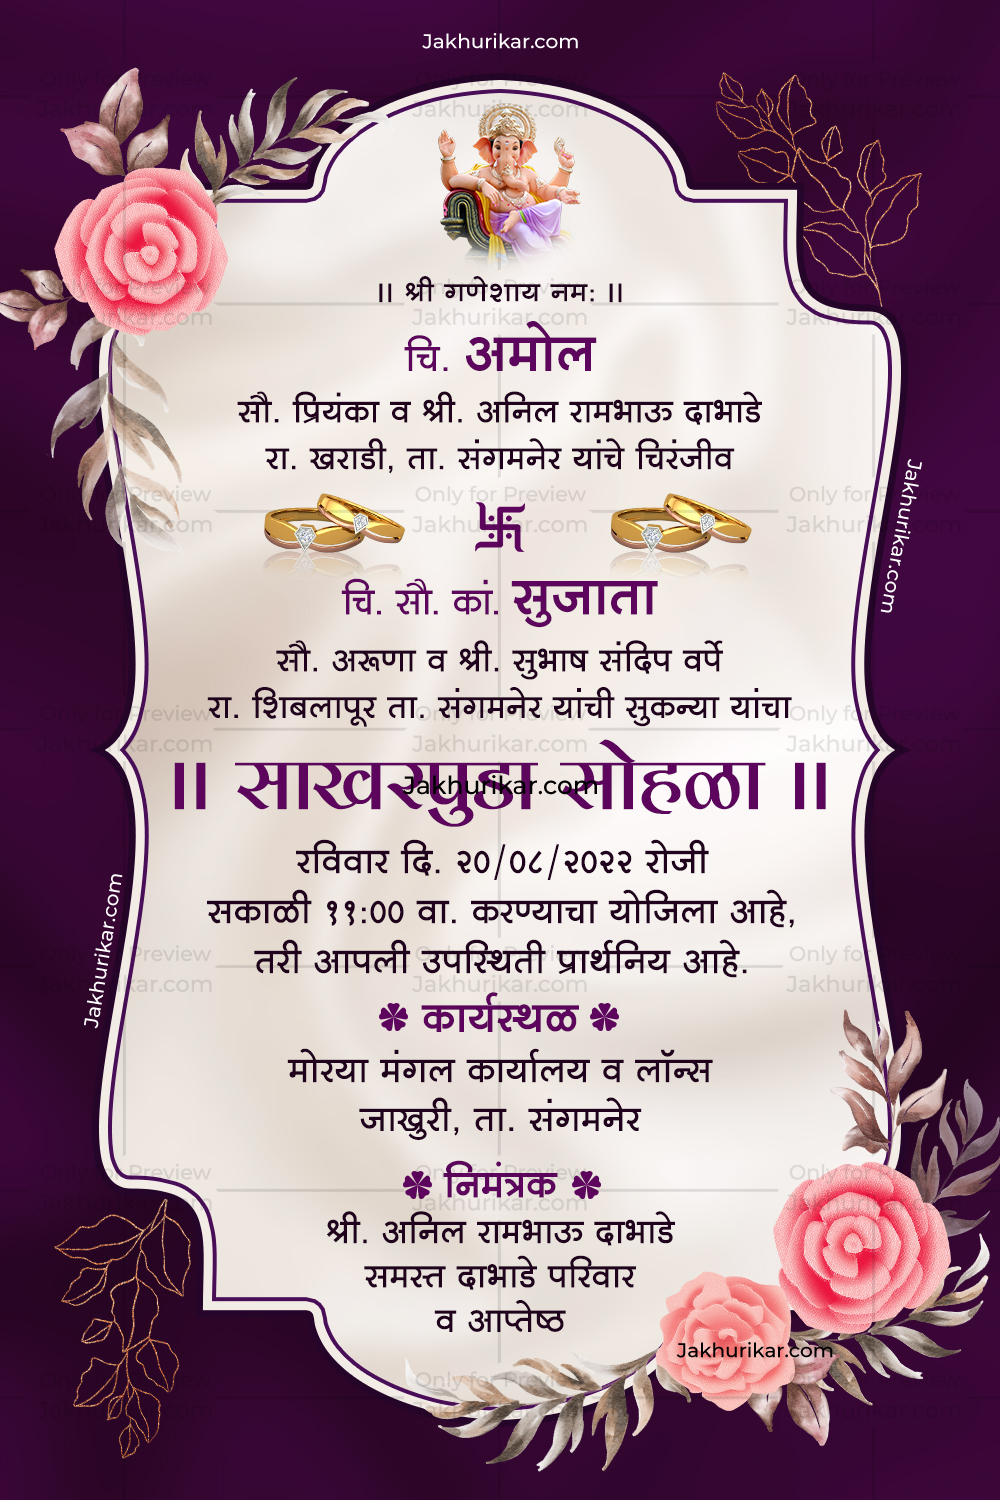 sakharpuda-invitation-card-in-marathi by Jakhurikar on DeviantArt